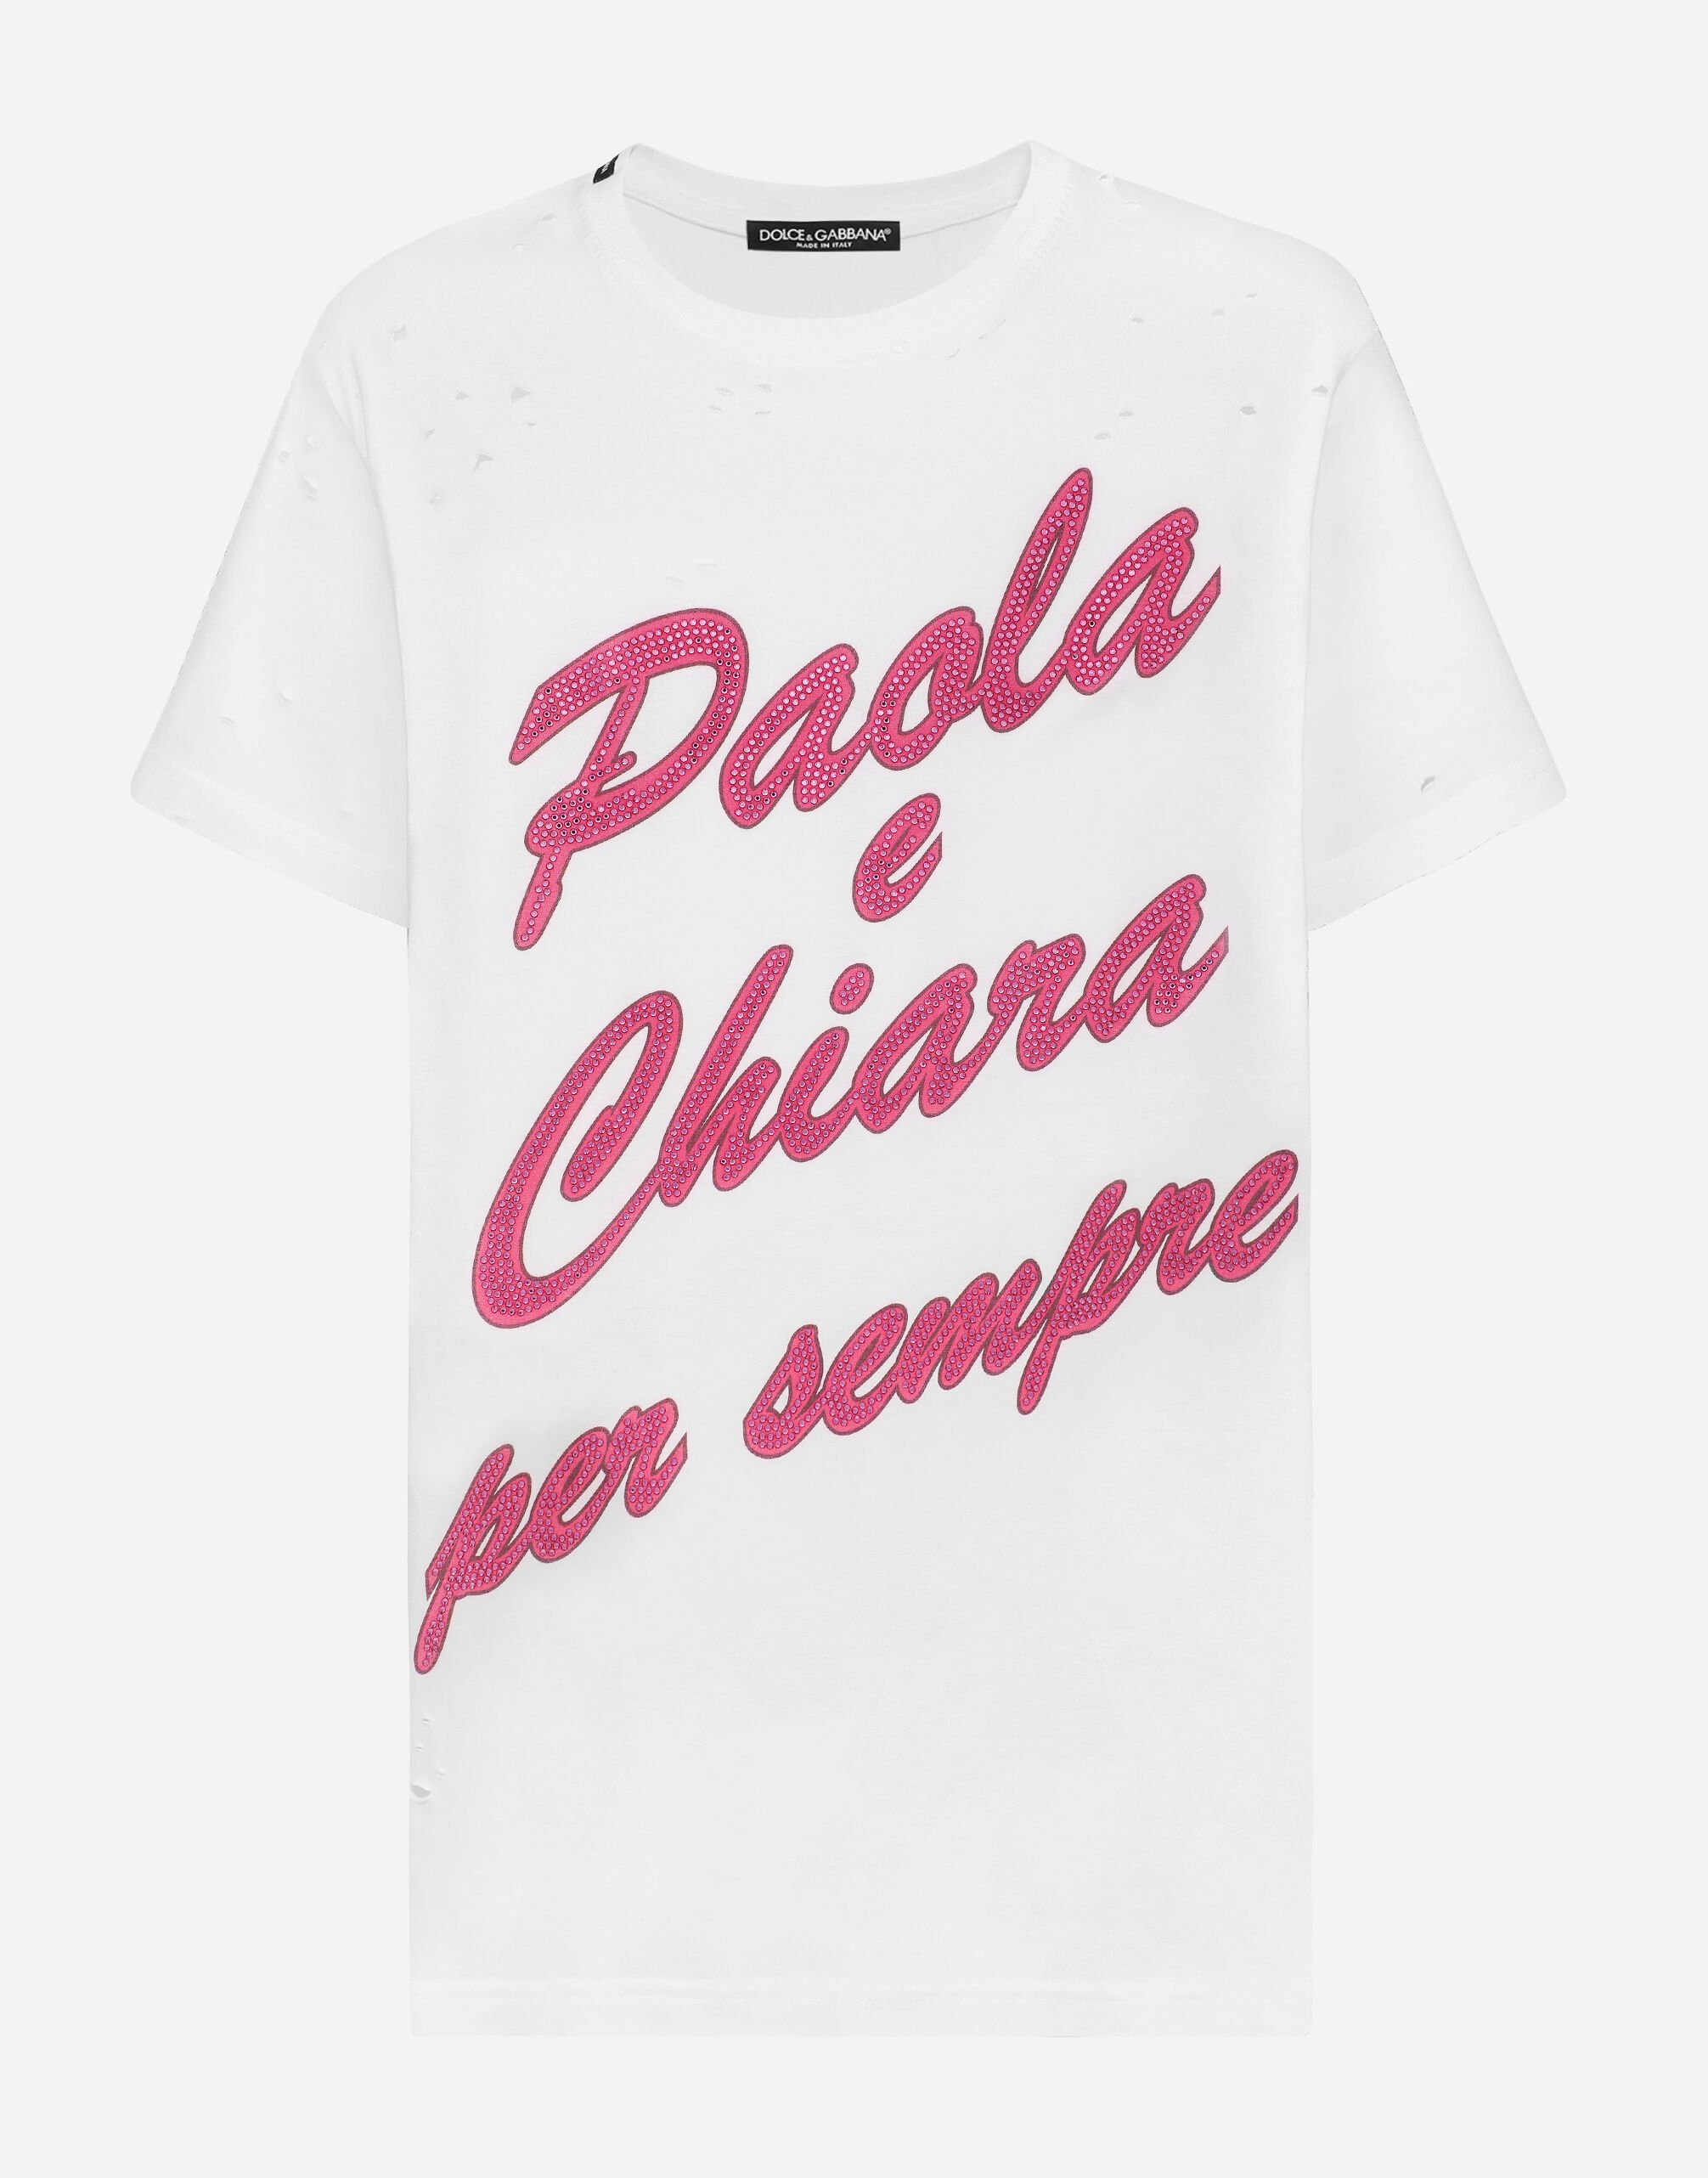 Dolce&Gabbana تيشرت "Paola e Chiara per sempre" أبيض I8AOHMG7K9Z